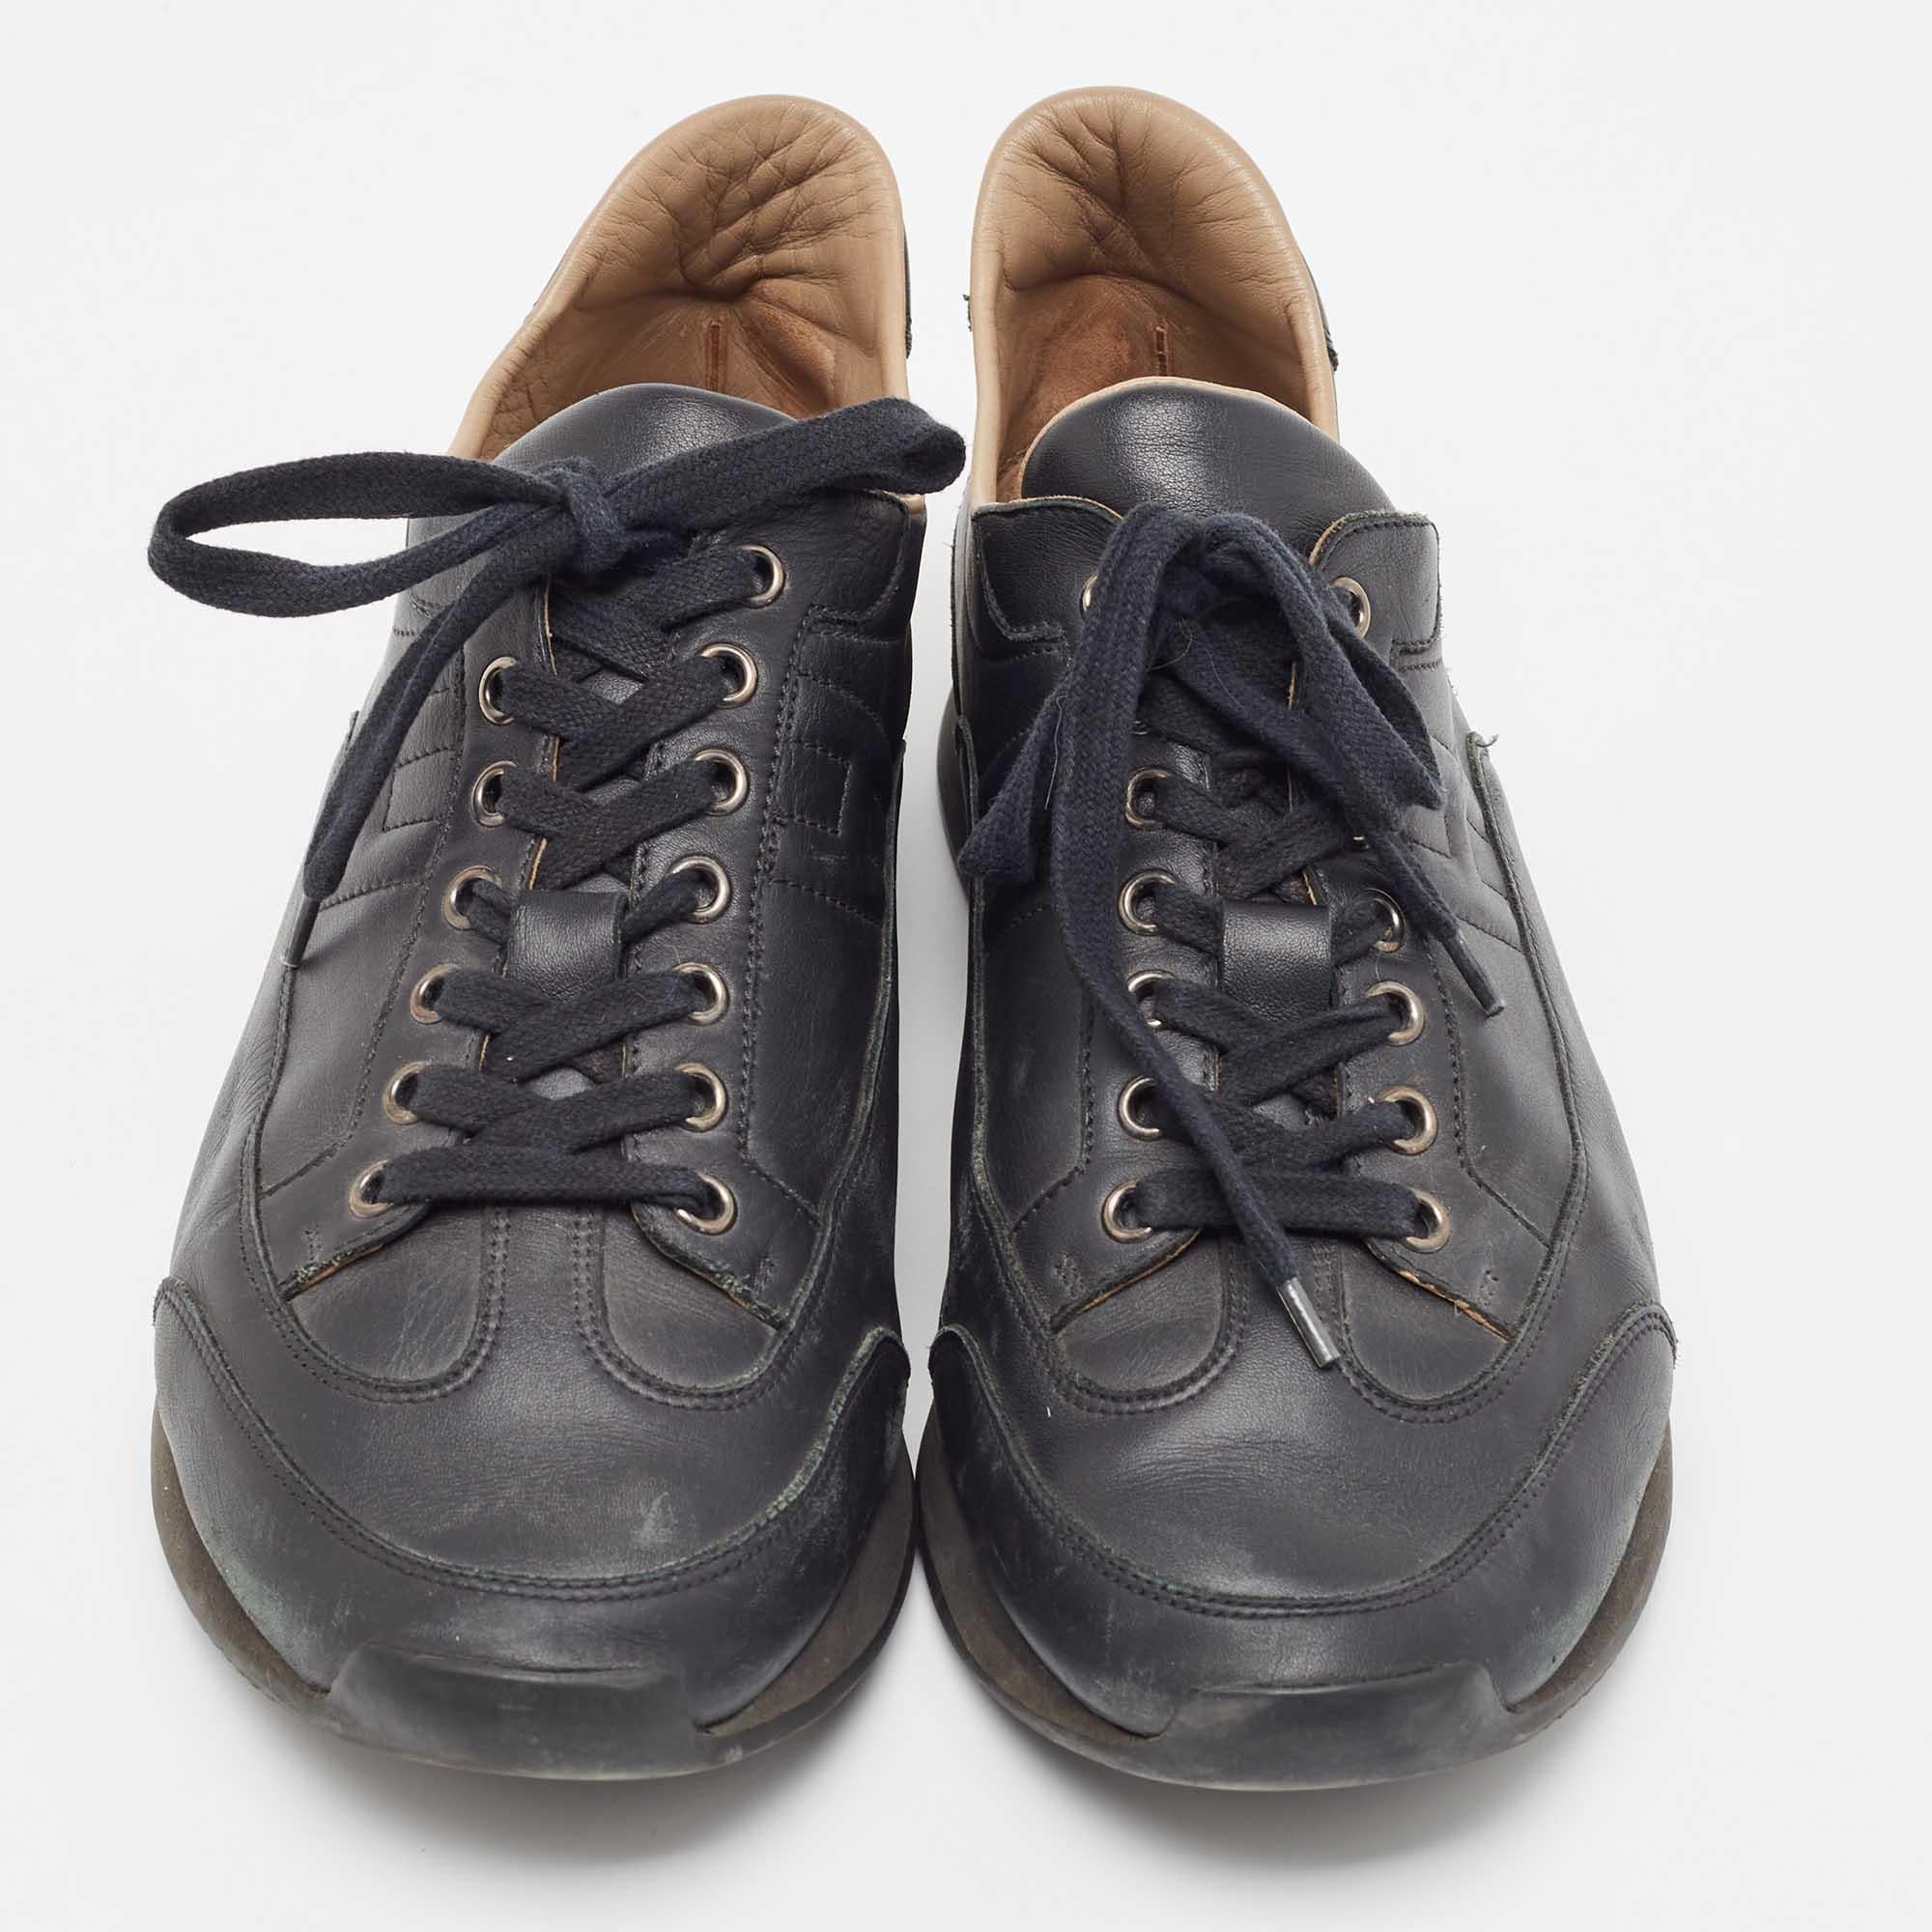 Men's Hermes Black Leather Quicker Low Top Sneakers Size 42.5